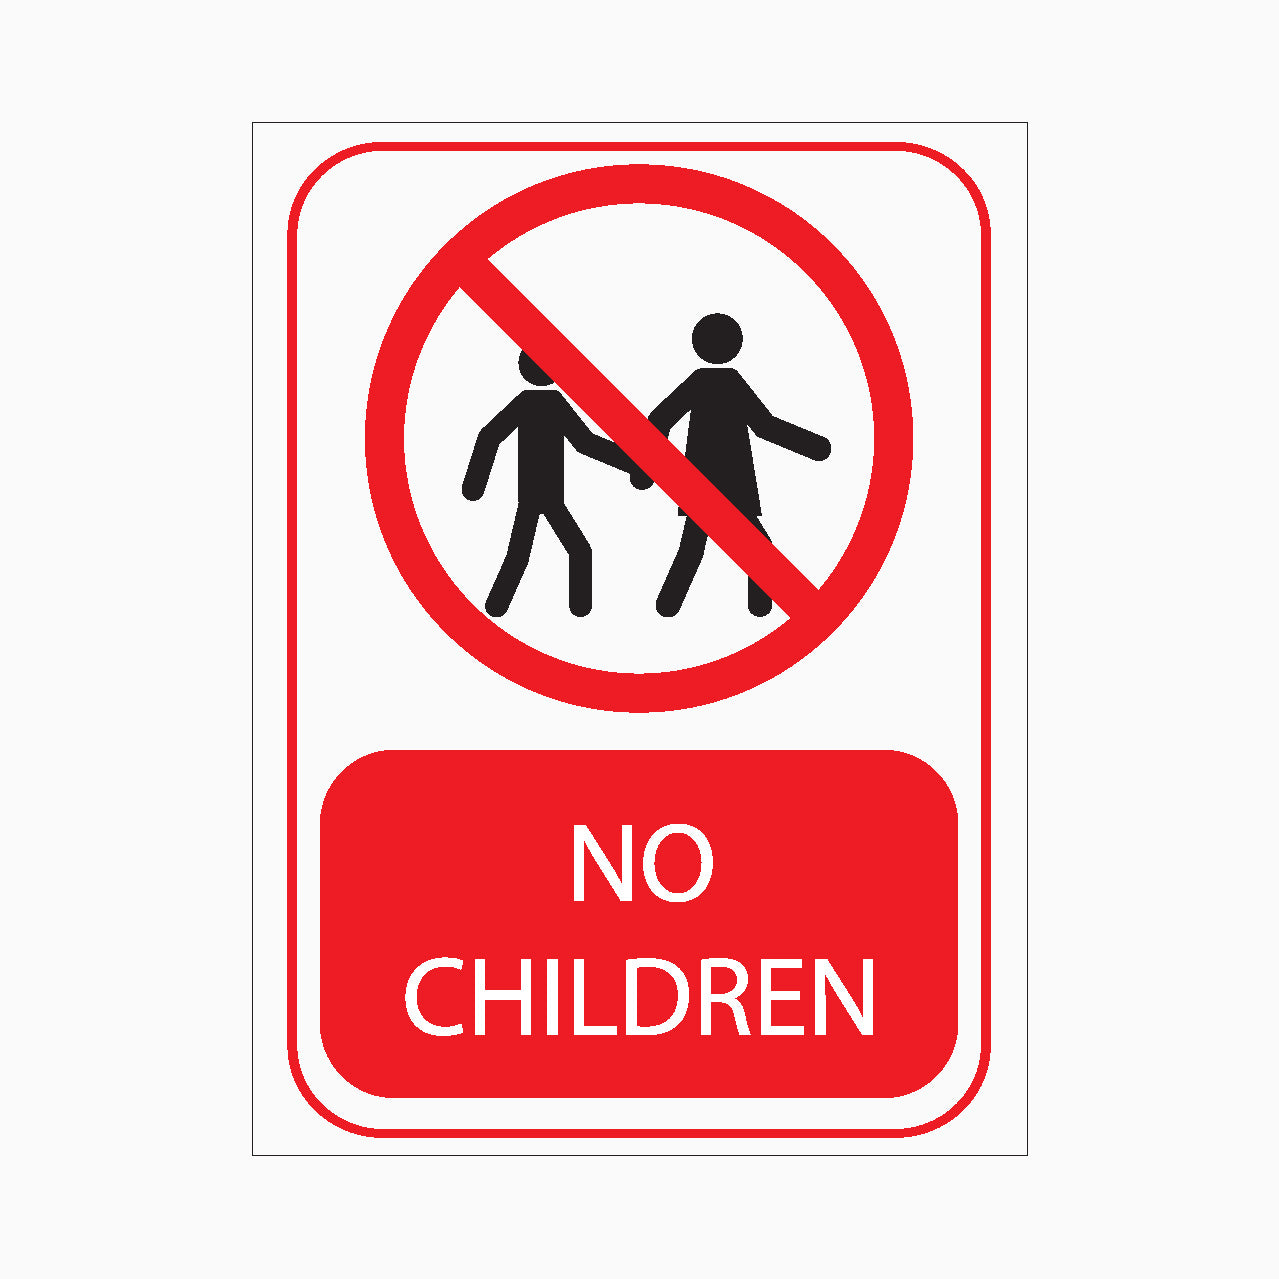 NO CHILDREN SIGN - PROHIBITION SIGN